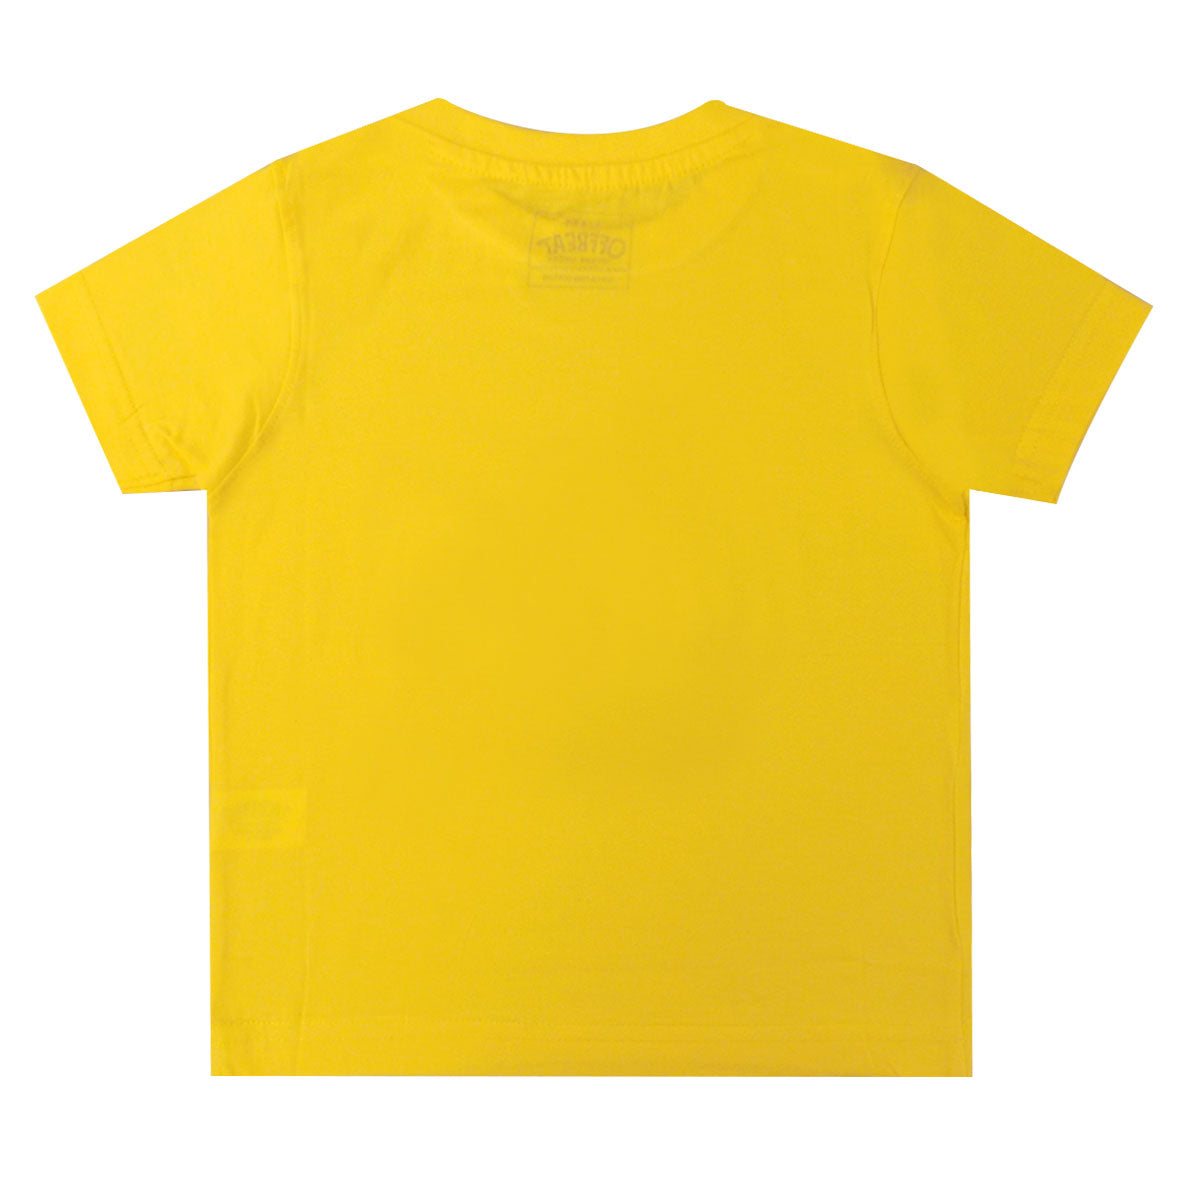 Little Sparkle - Premium Round Neck Cotton Tees for Kids - Lemon Yellow